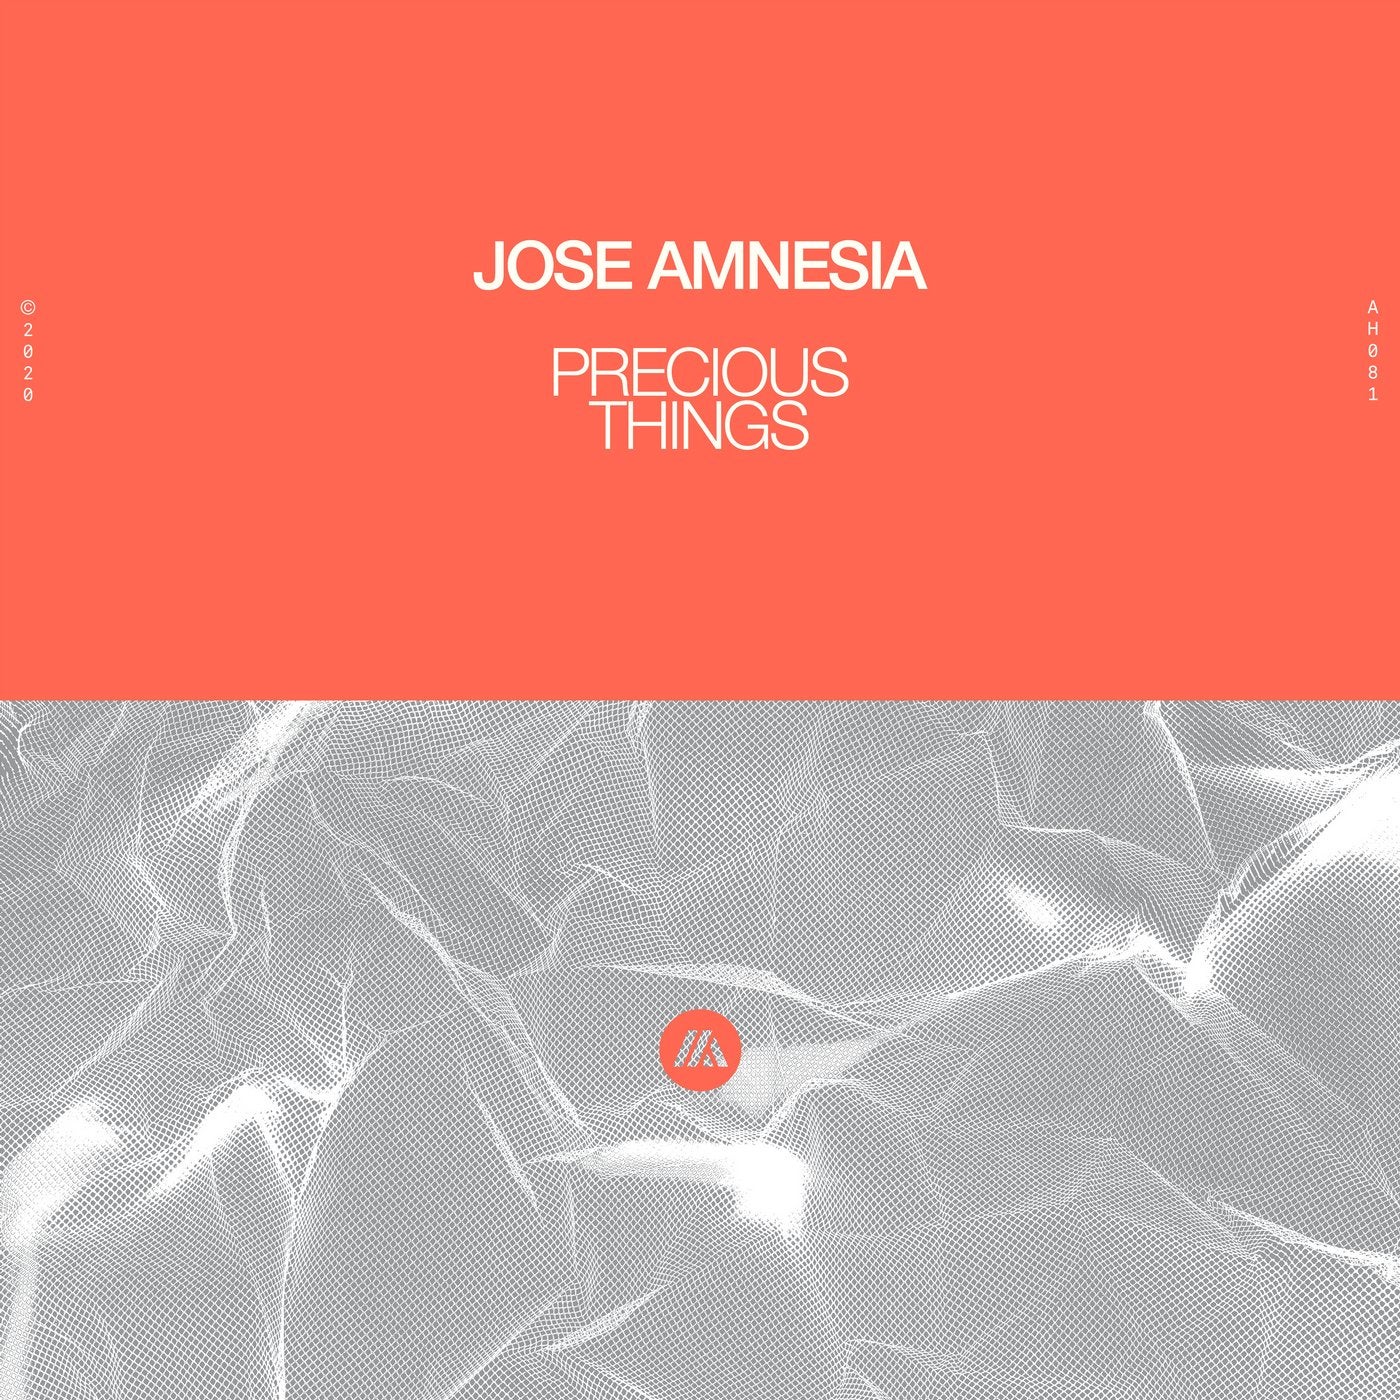 José Amnesia - Precious Things [AH081]